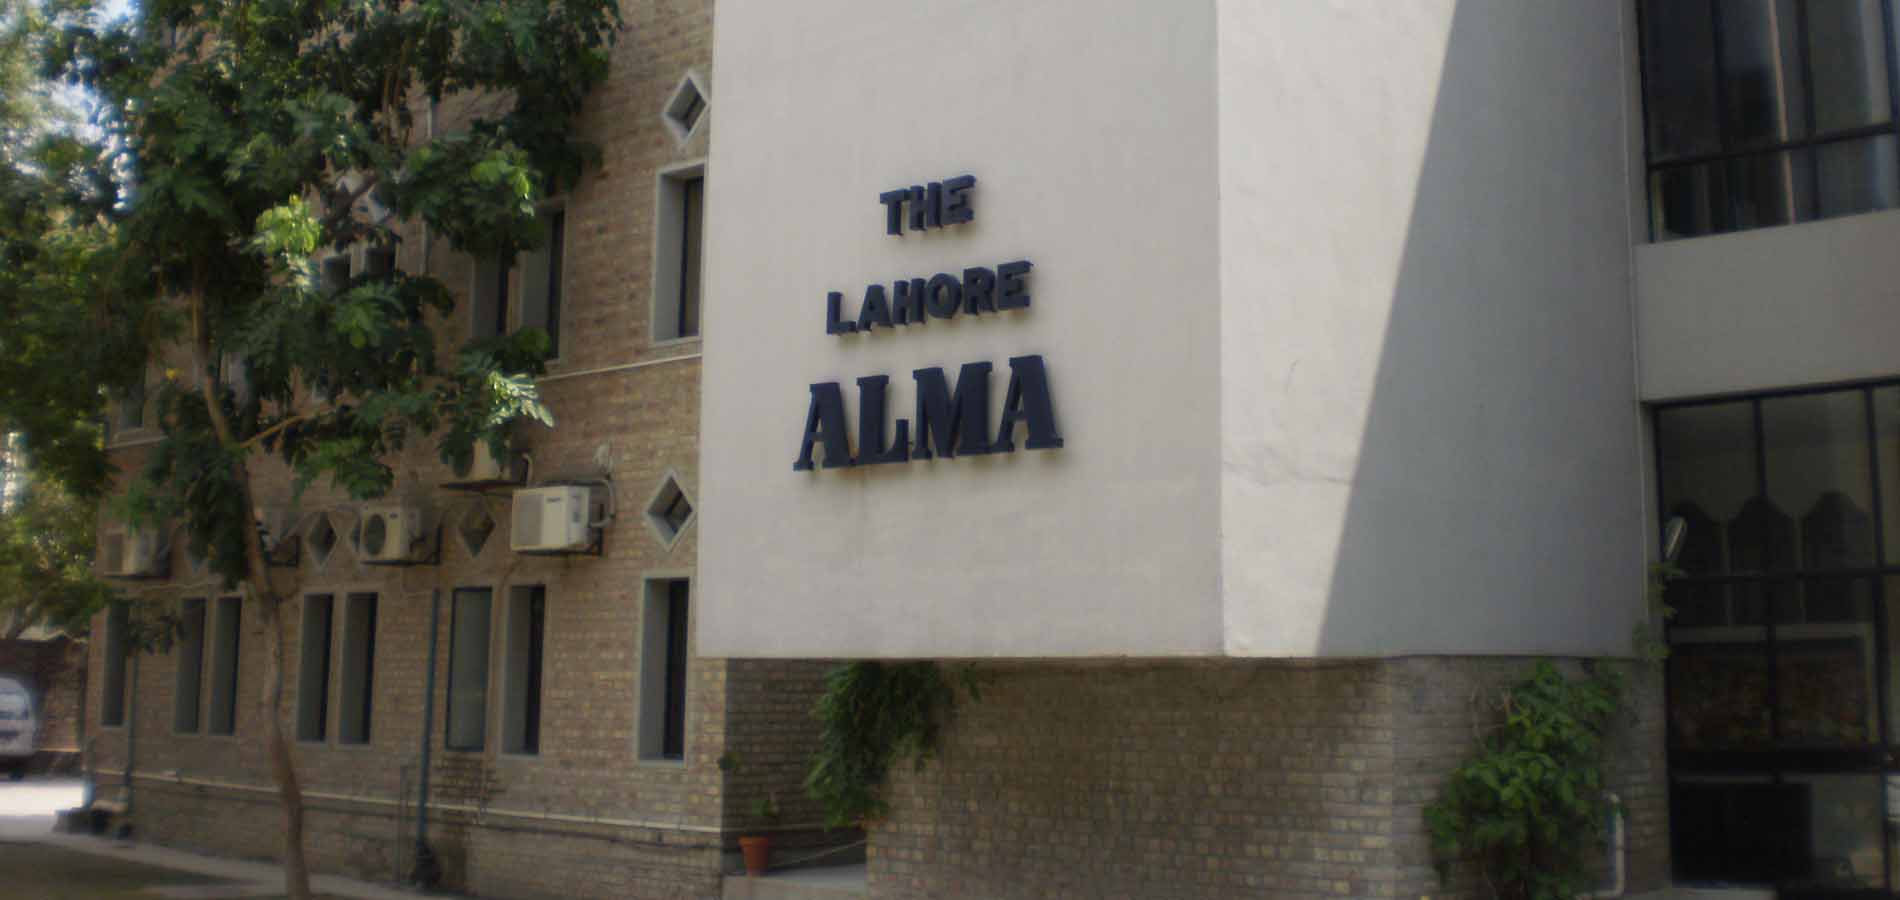 The Lahore Alma